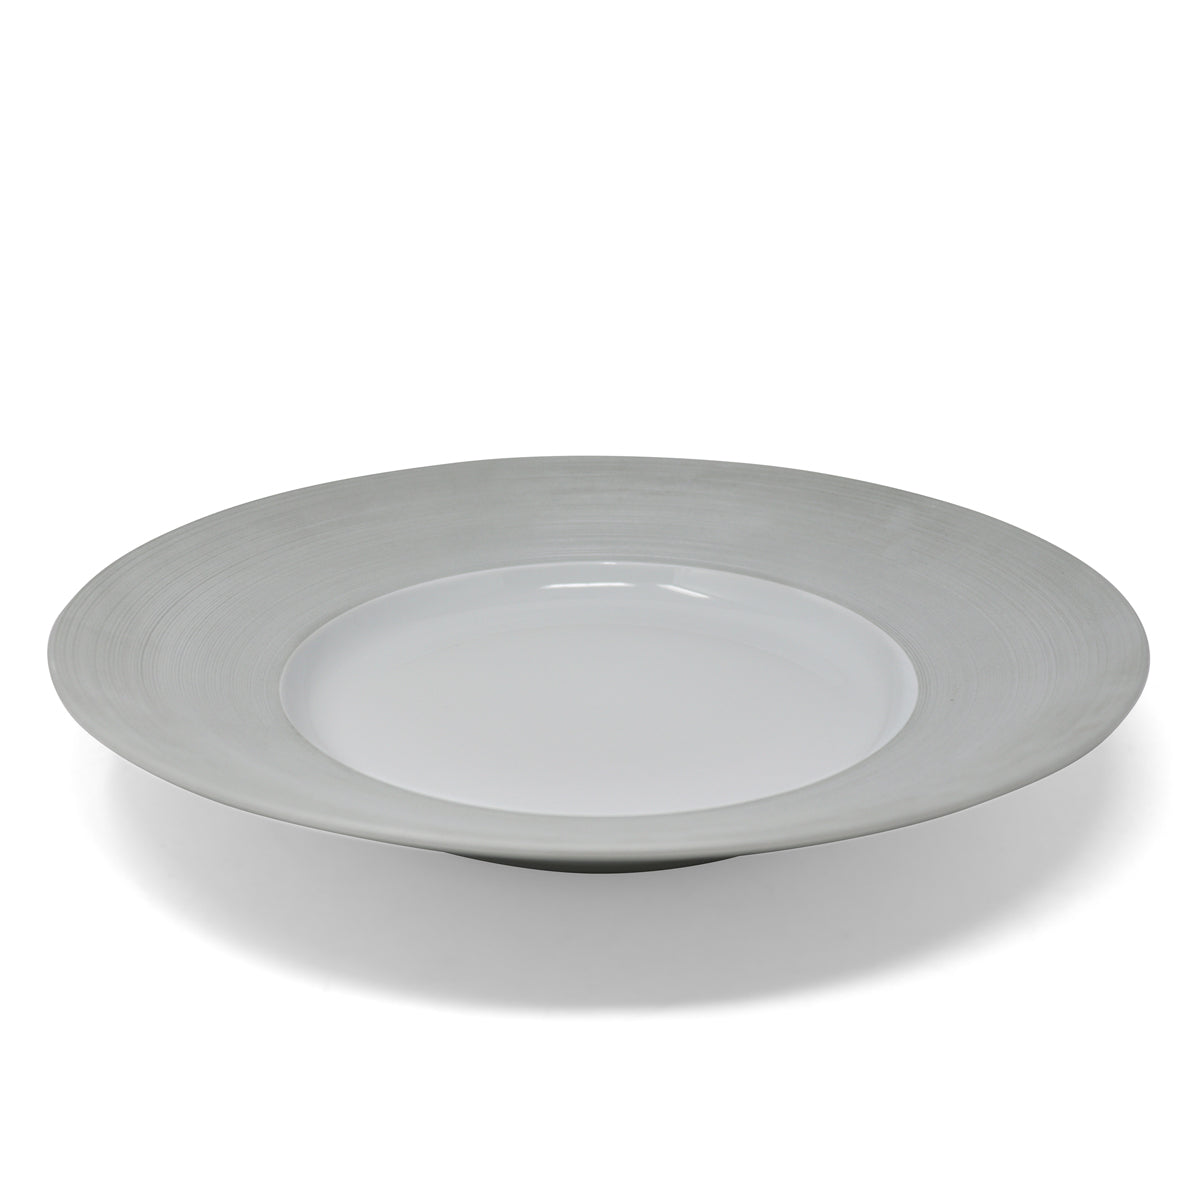 HEMISPHERE Grey - Flat dish with wing